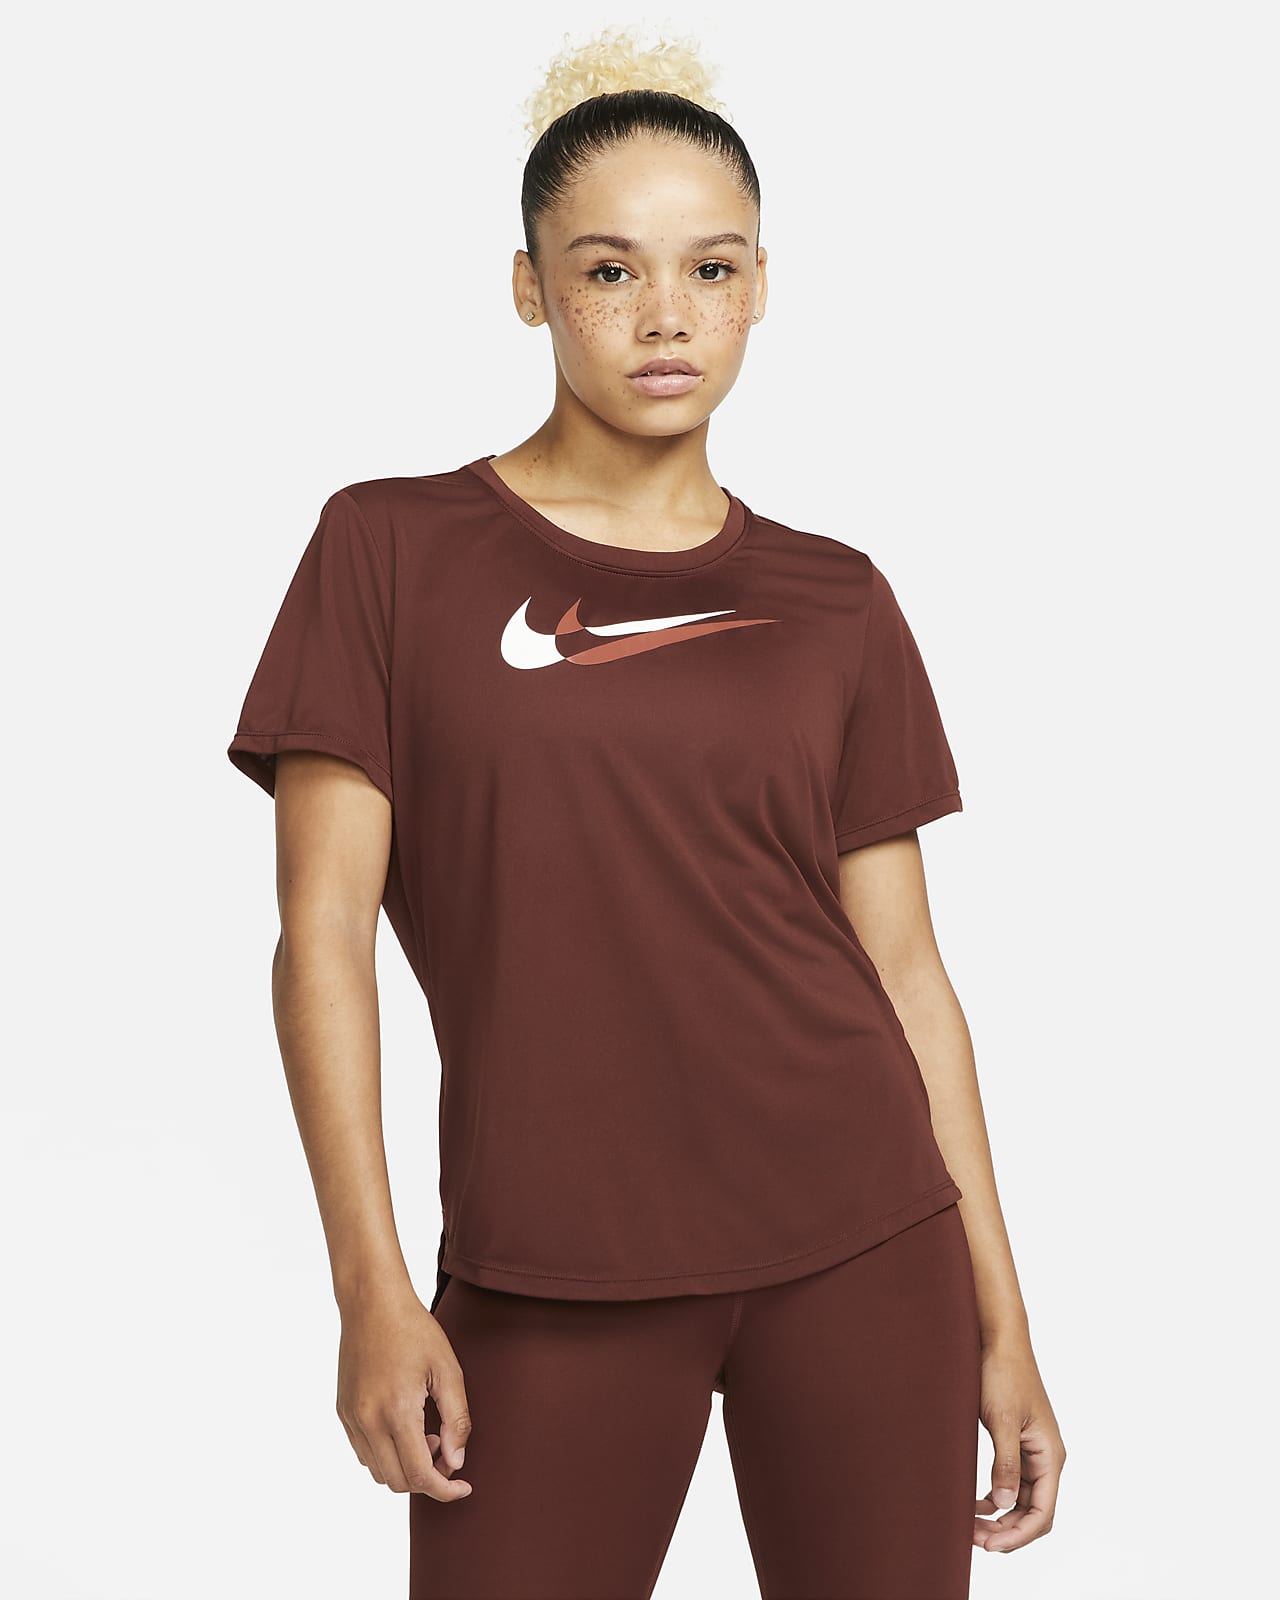 Nike Dri-FIT Swoosh Run Women's Short-Sleeve Running Top